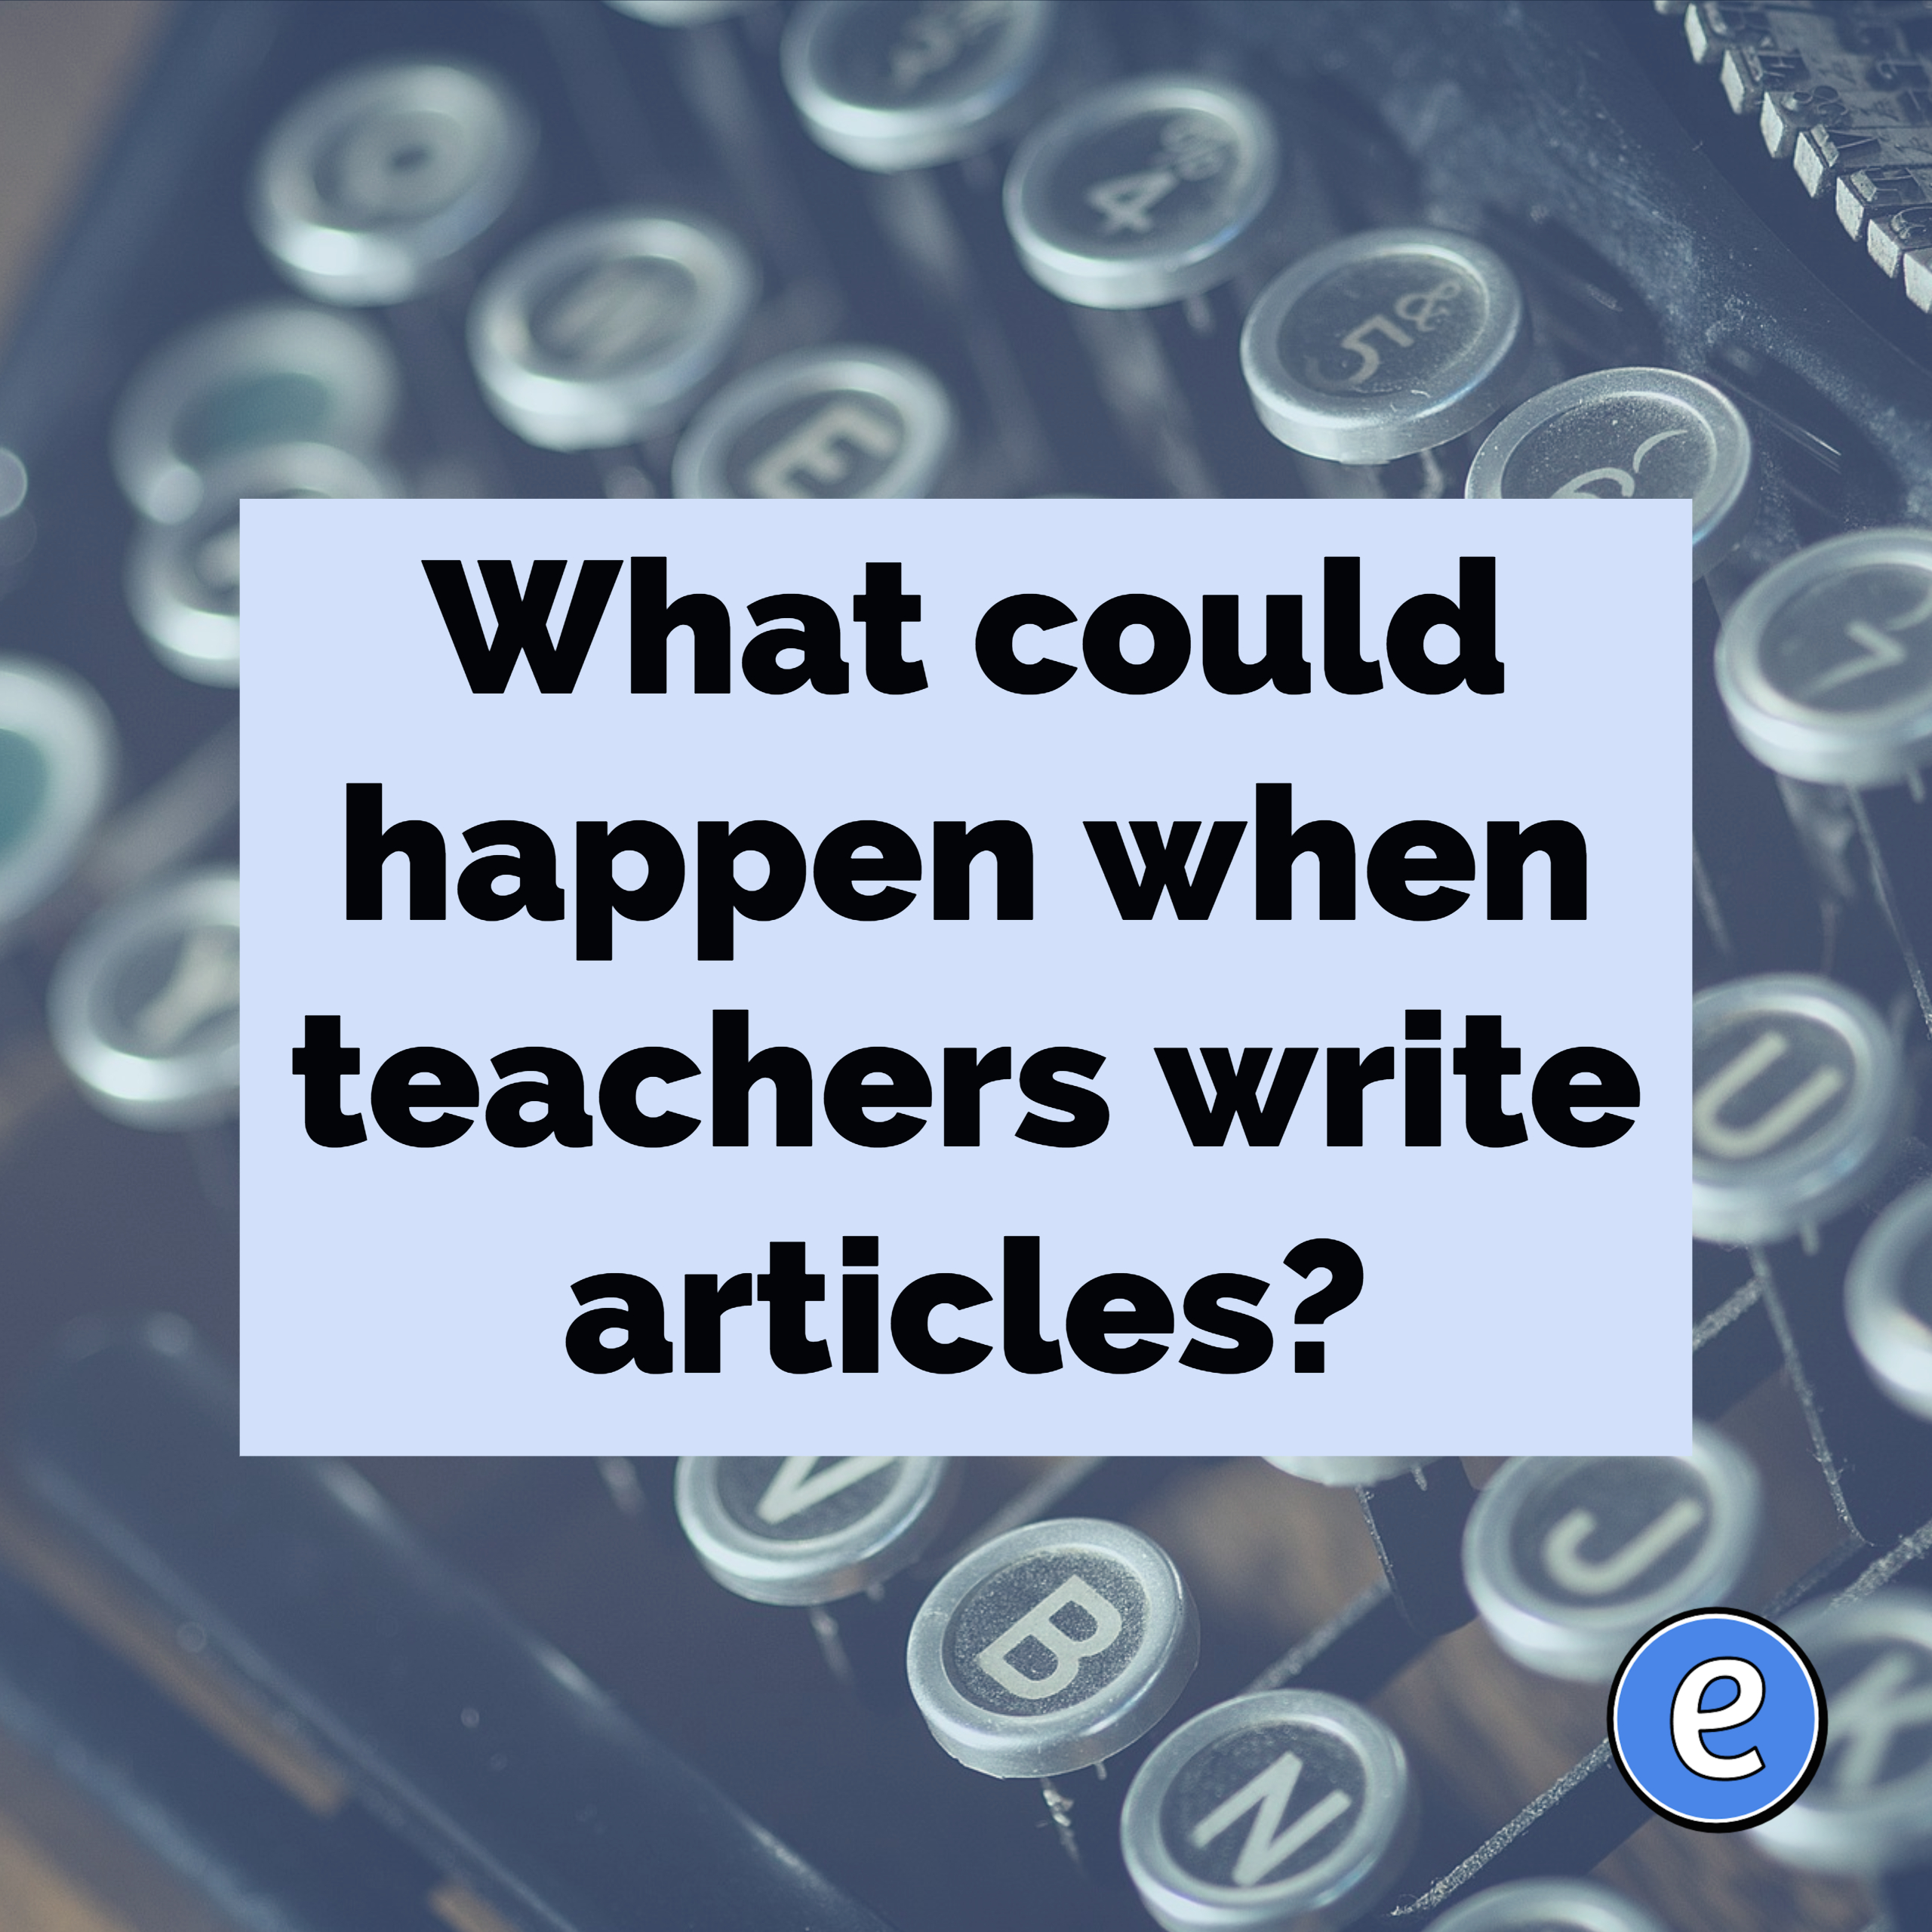 What could happen when teachers write articles?